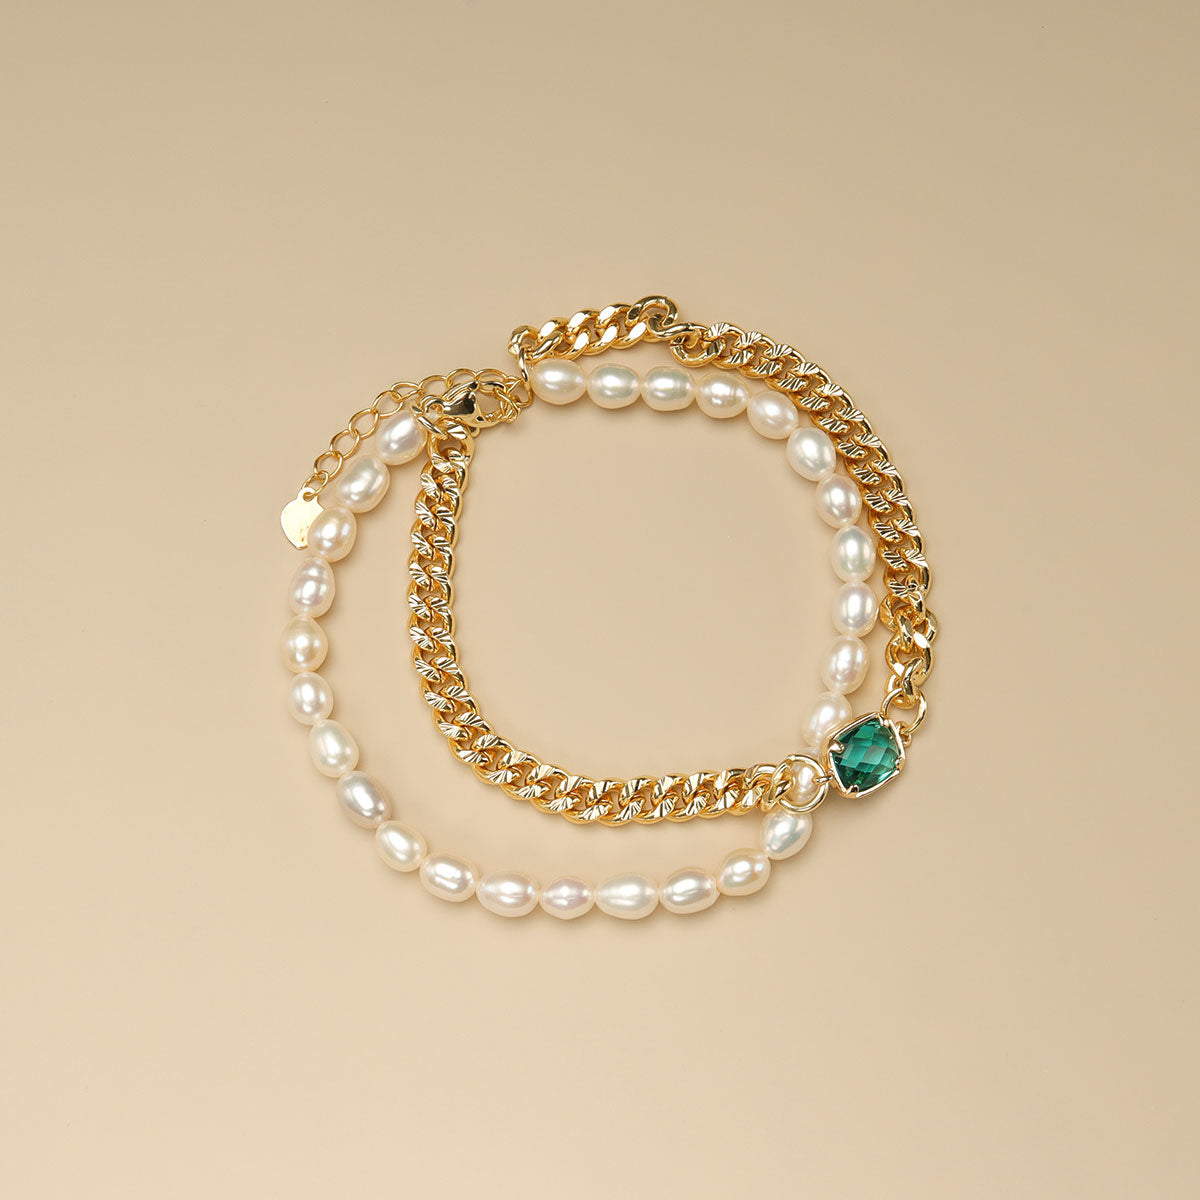 A cuban link bracelet and pearl beaded bracelet.